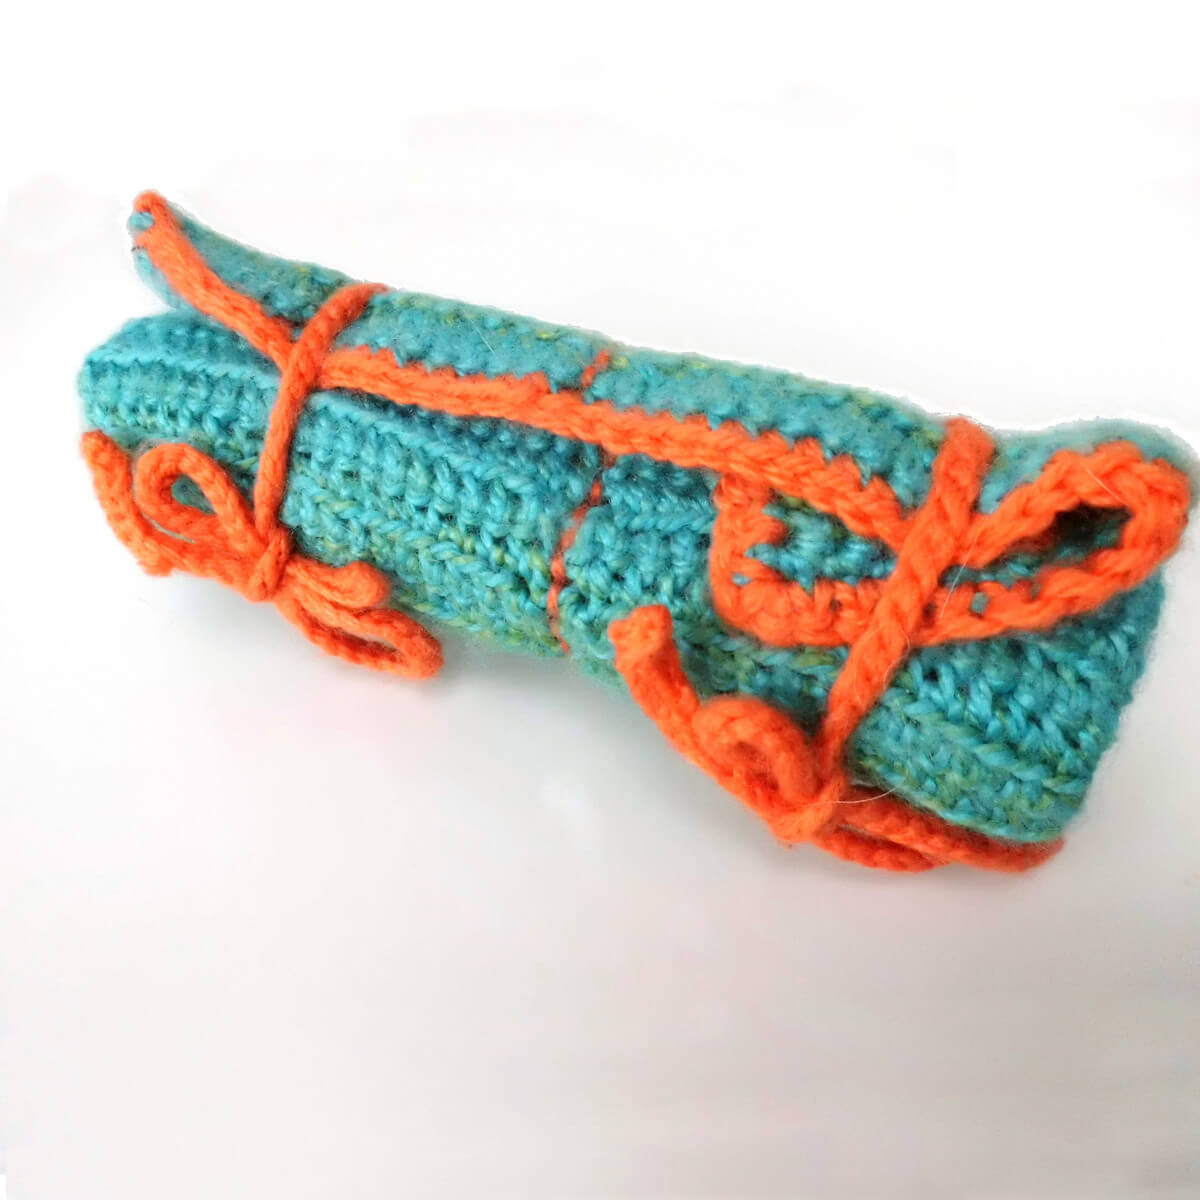 1 Piece Crochet Needle Case Organizer Crochet Hook Case Only